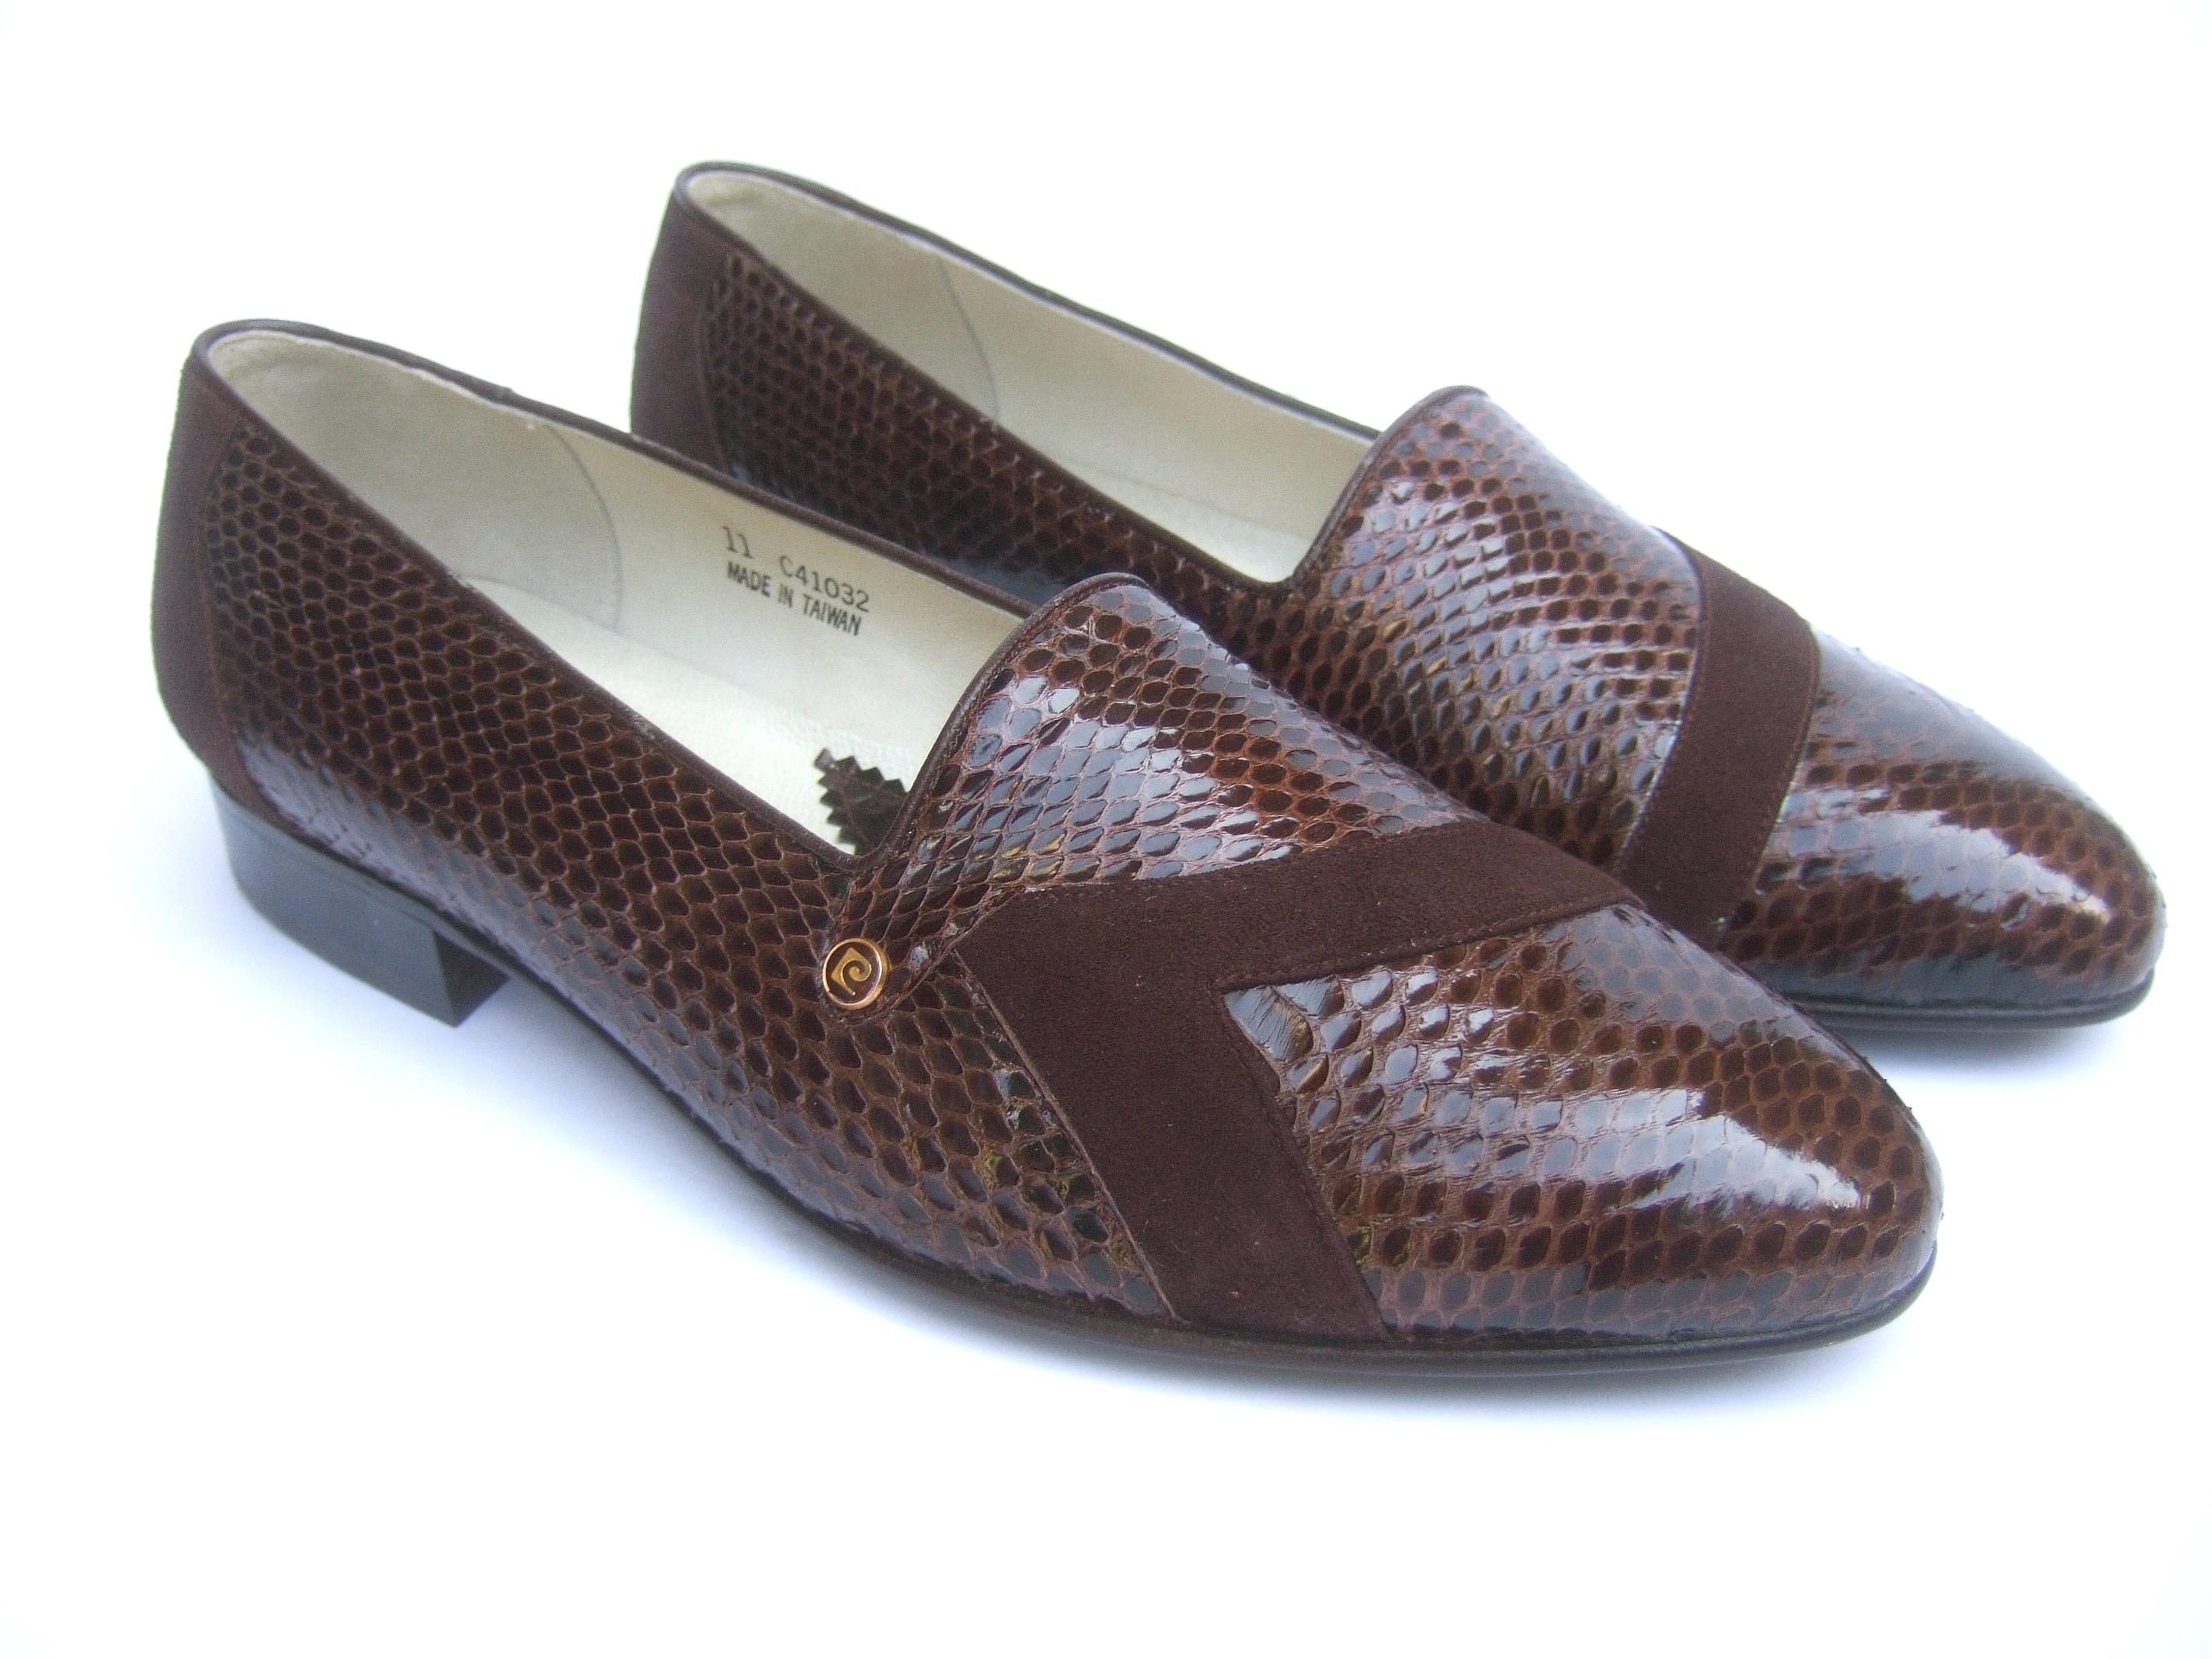 Pierre Cardin Men's Brown Snakeskin Dress Shoes New Vintage US Size 11 c 1970s 1